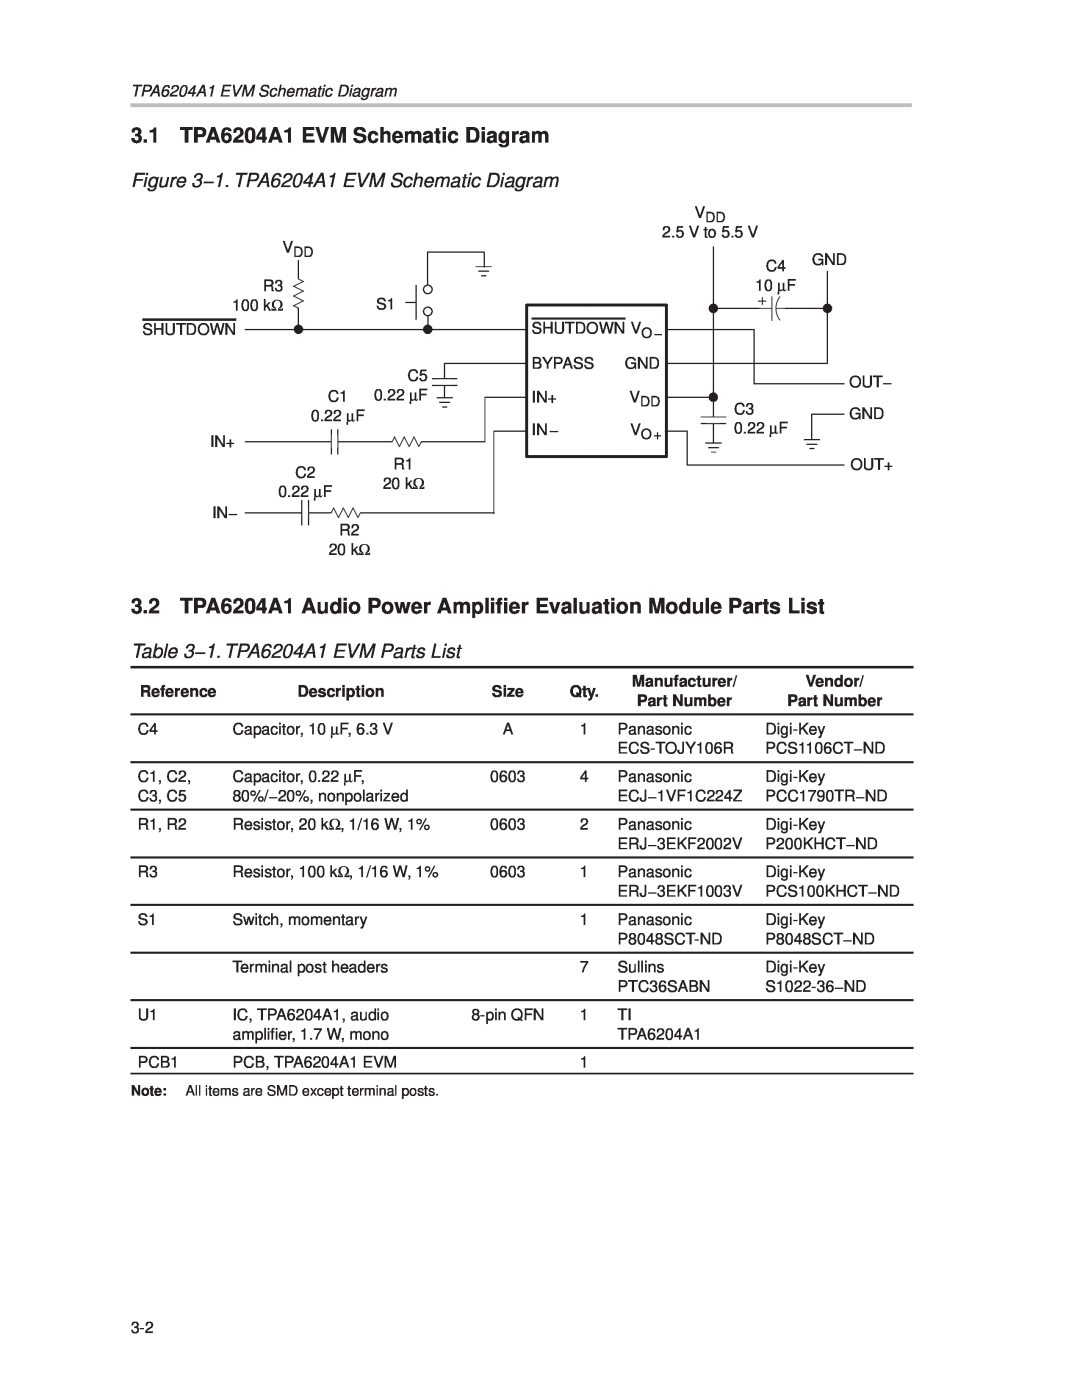 Texas Instruments 3.1 TPA6204A1 EVM Schematic Diagram, 1. TPA6204A1 EVM Schematic Diagram, 1. TPA6204A1 EVM Parts List 